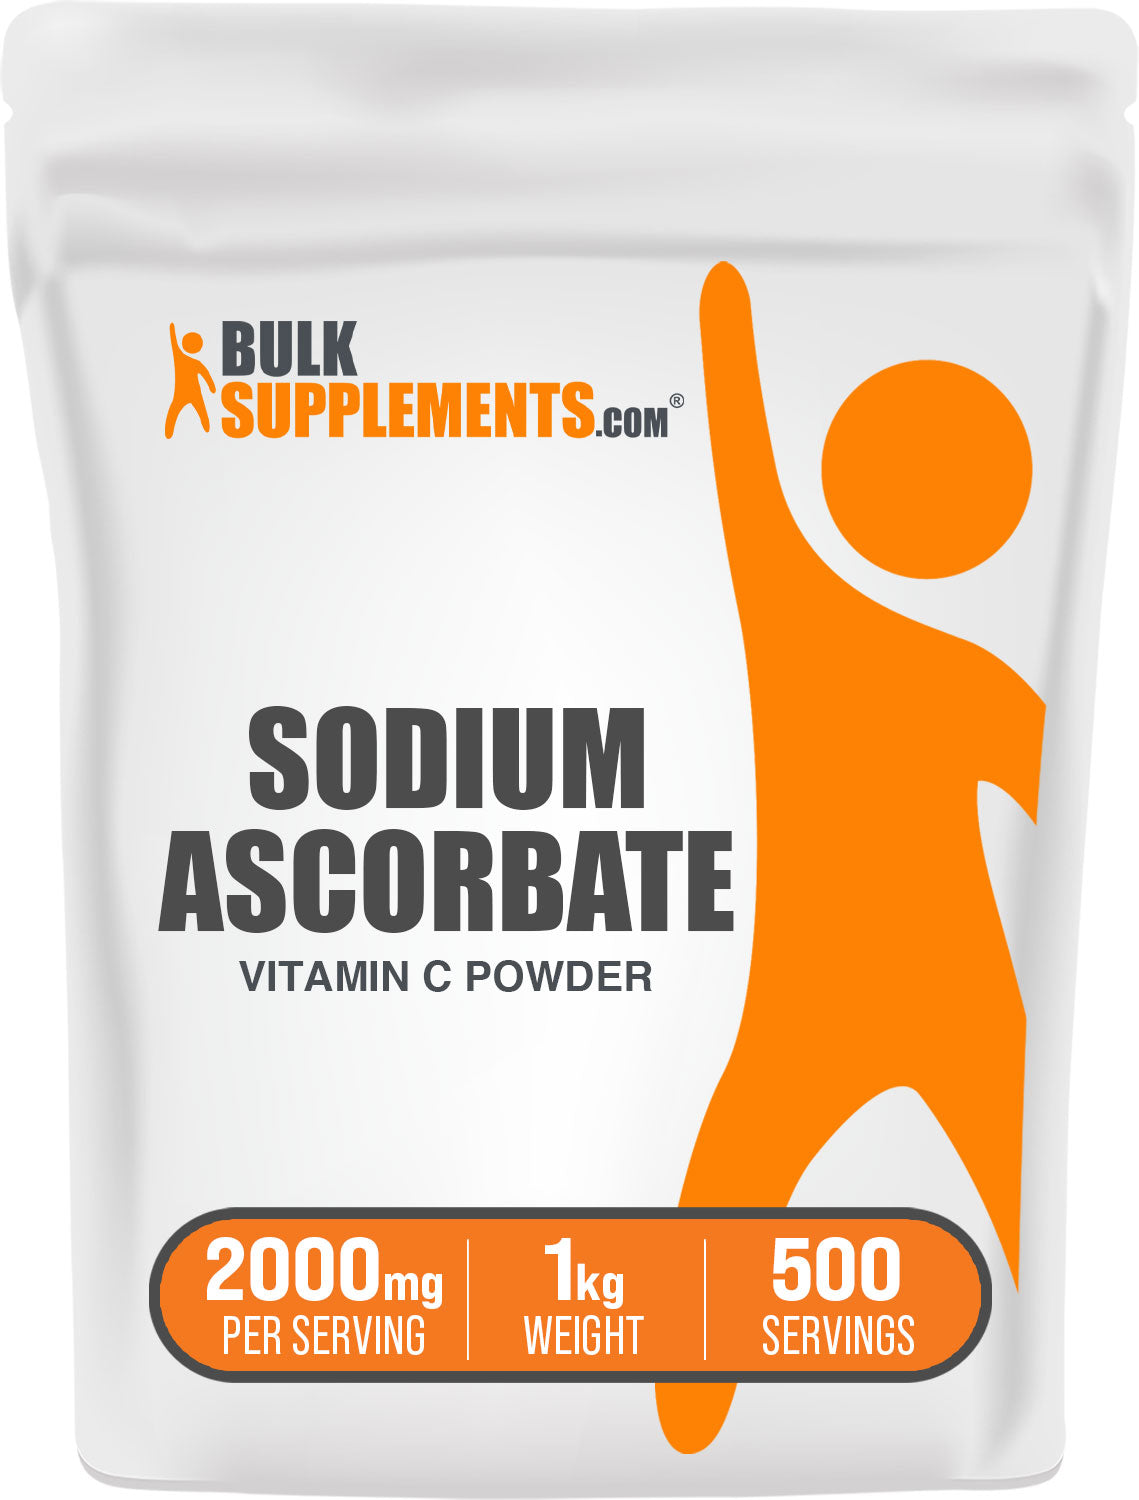 BulkSupplements Sodium Ascorbate Vitamin C Powder 1kg bag